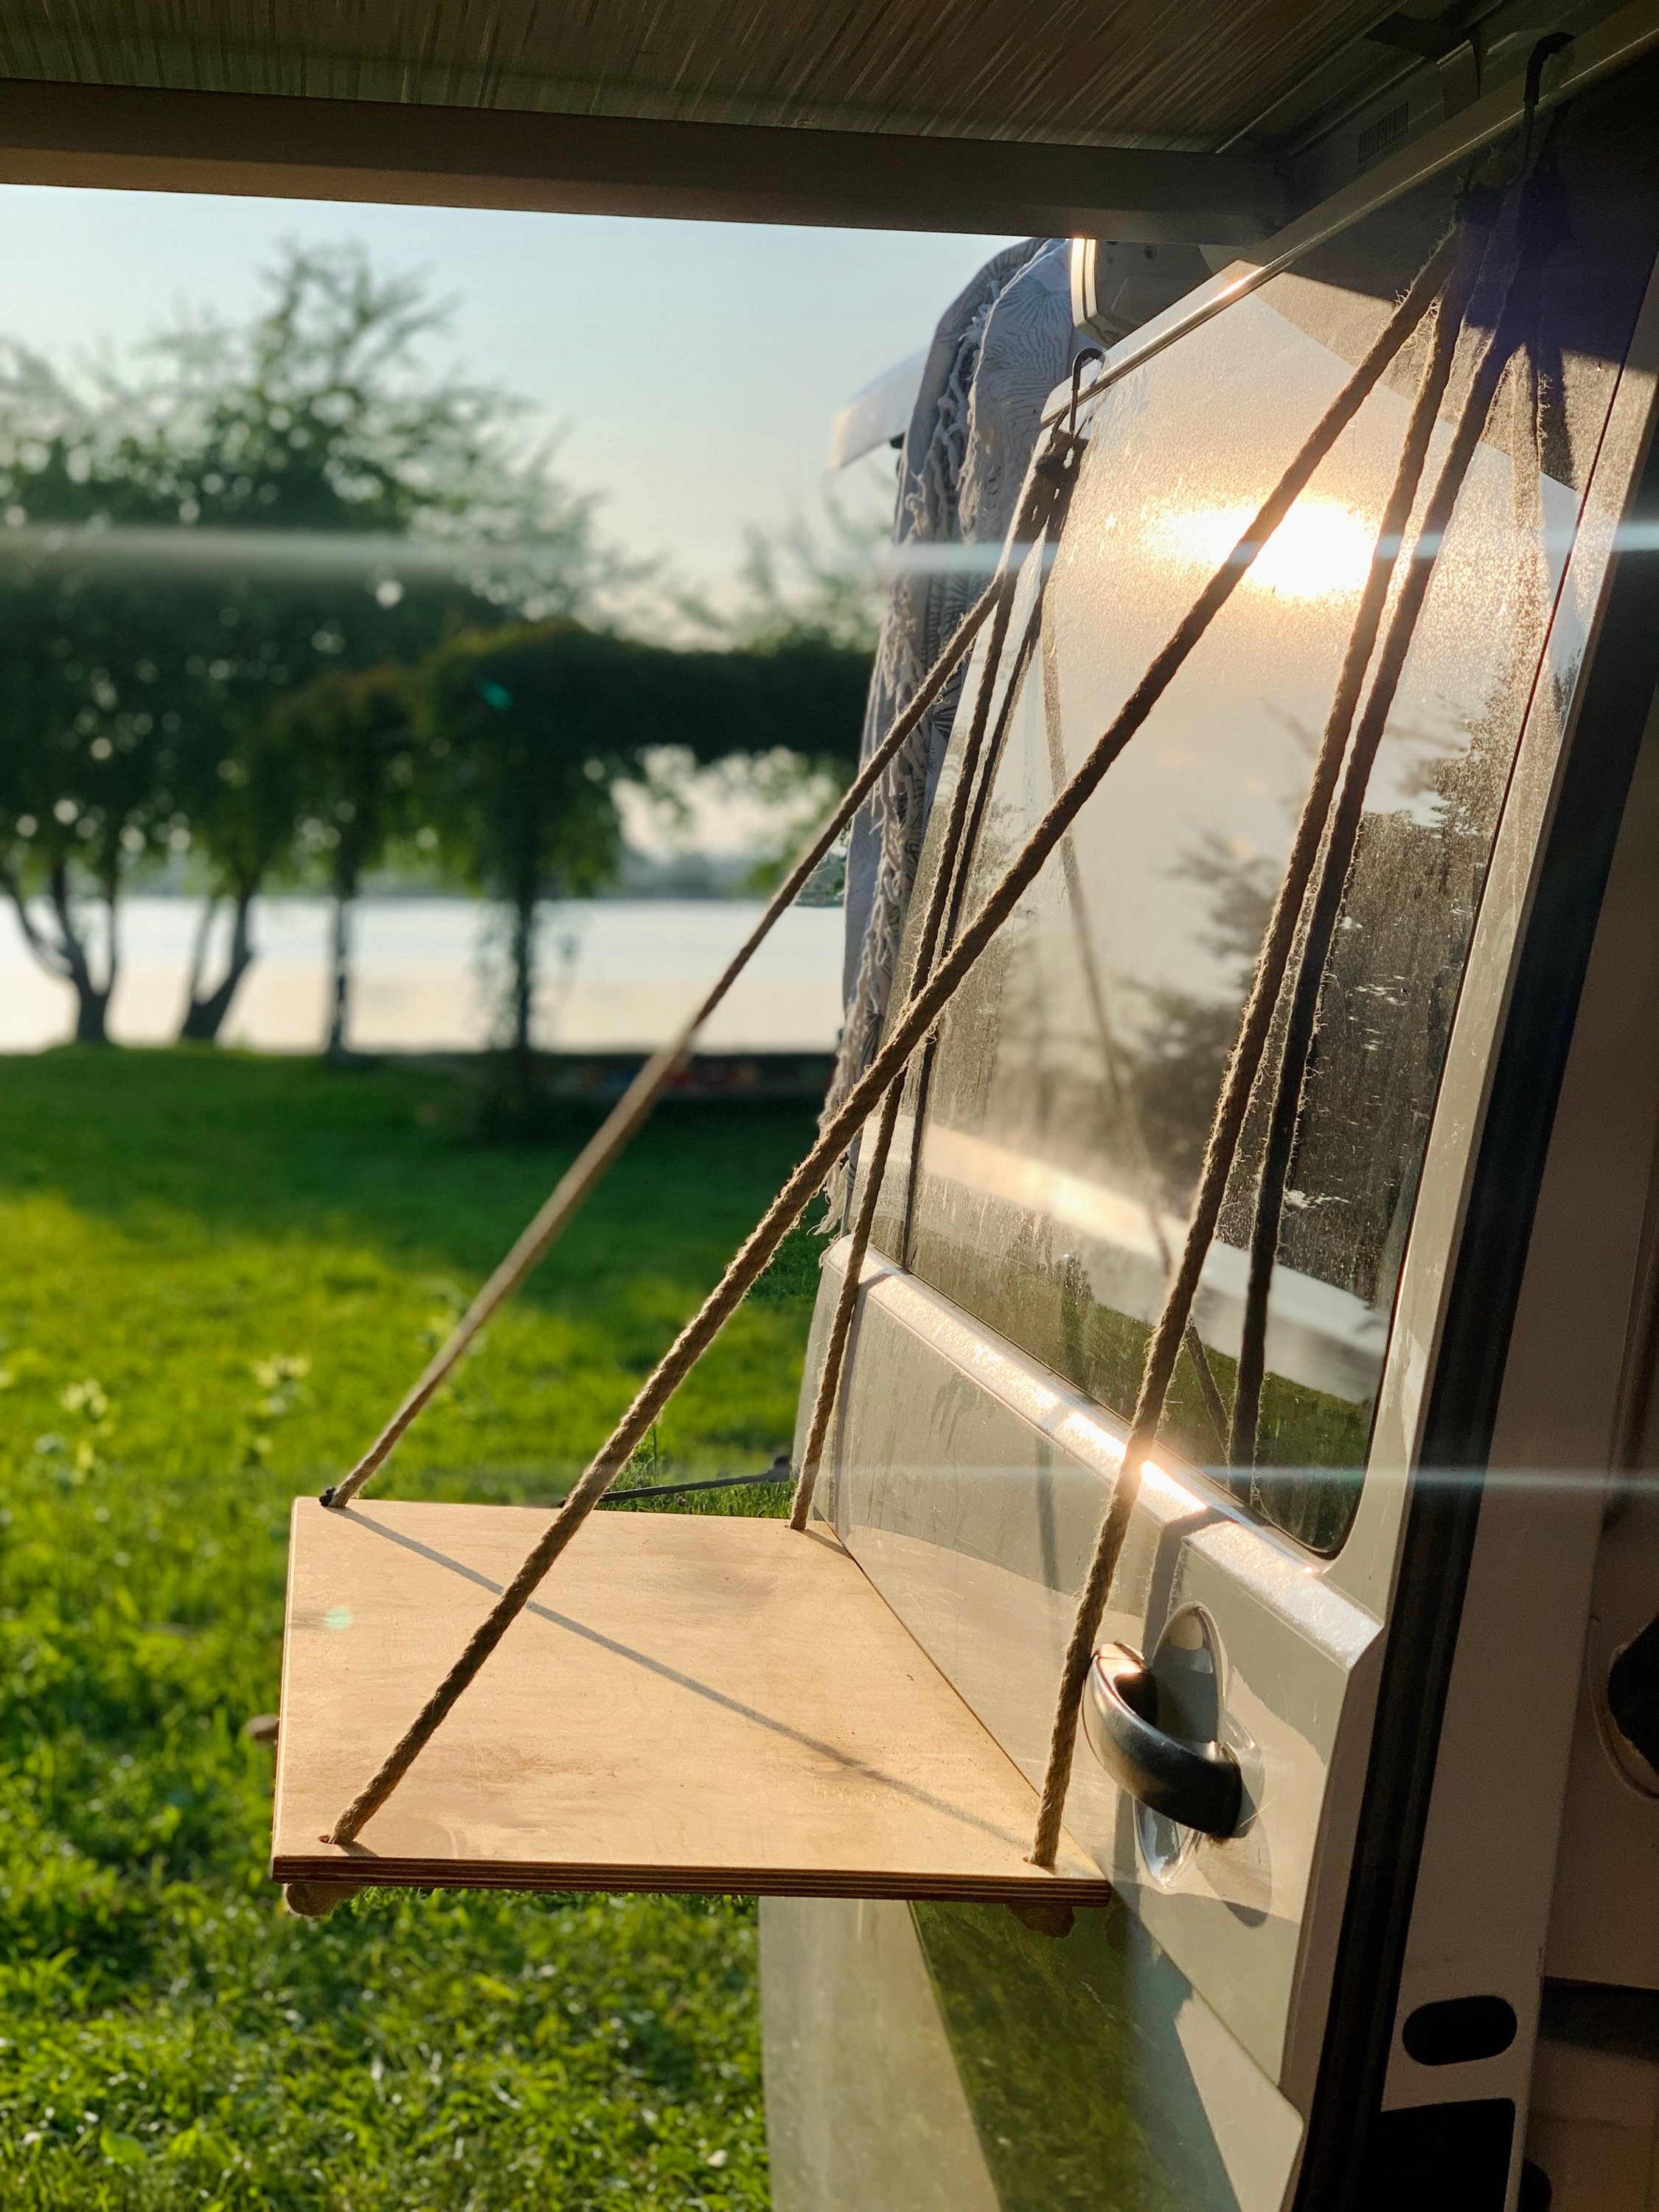 VW Bus Van Outside Table Outdoor Kitchen Camping Vanlife Van